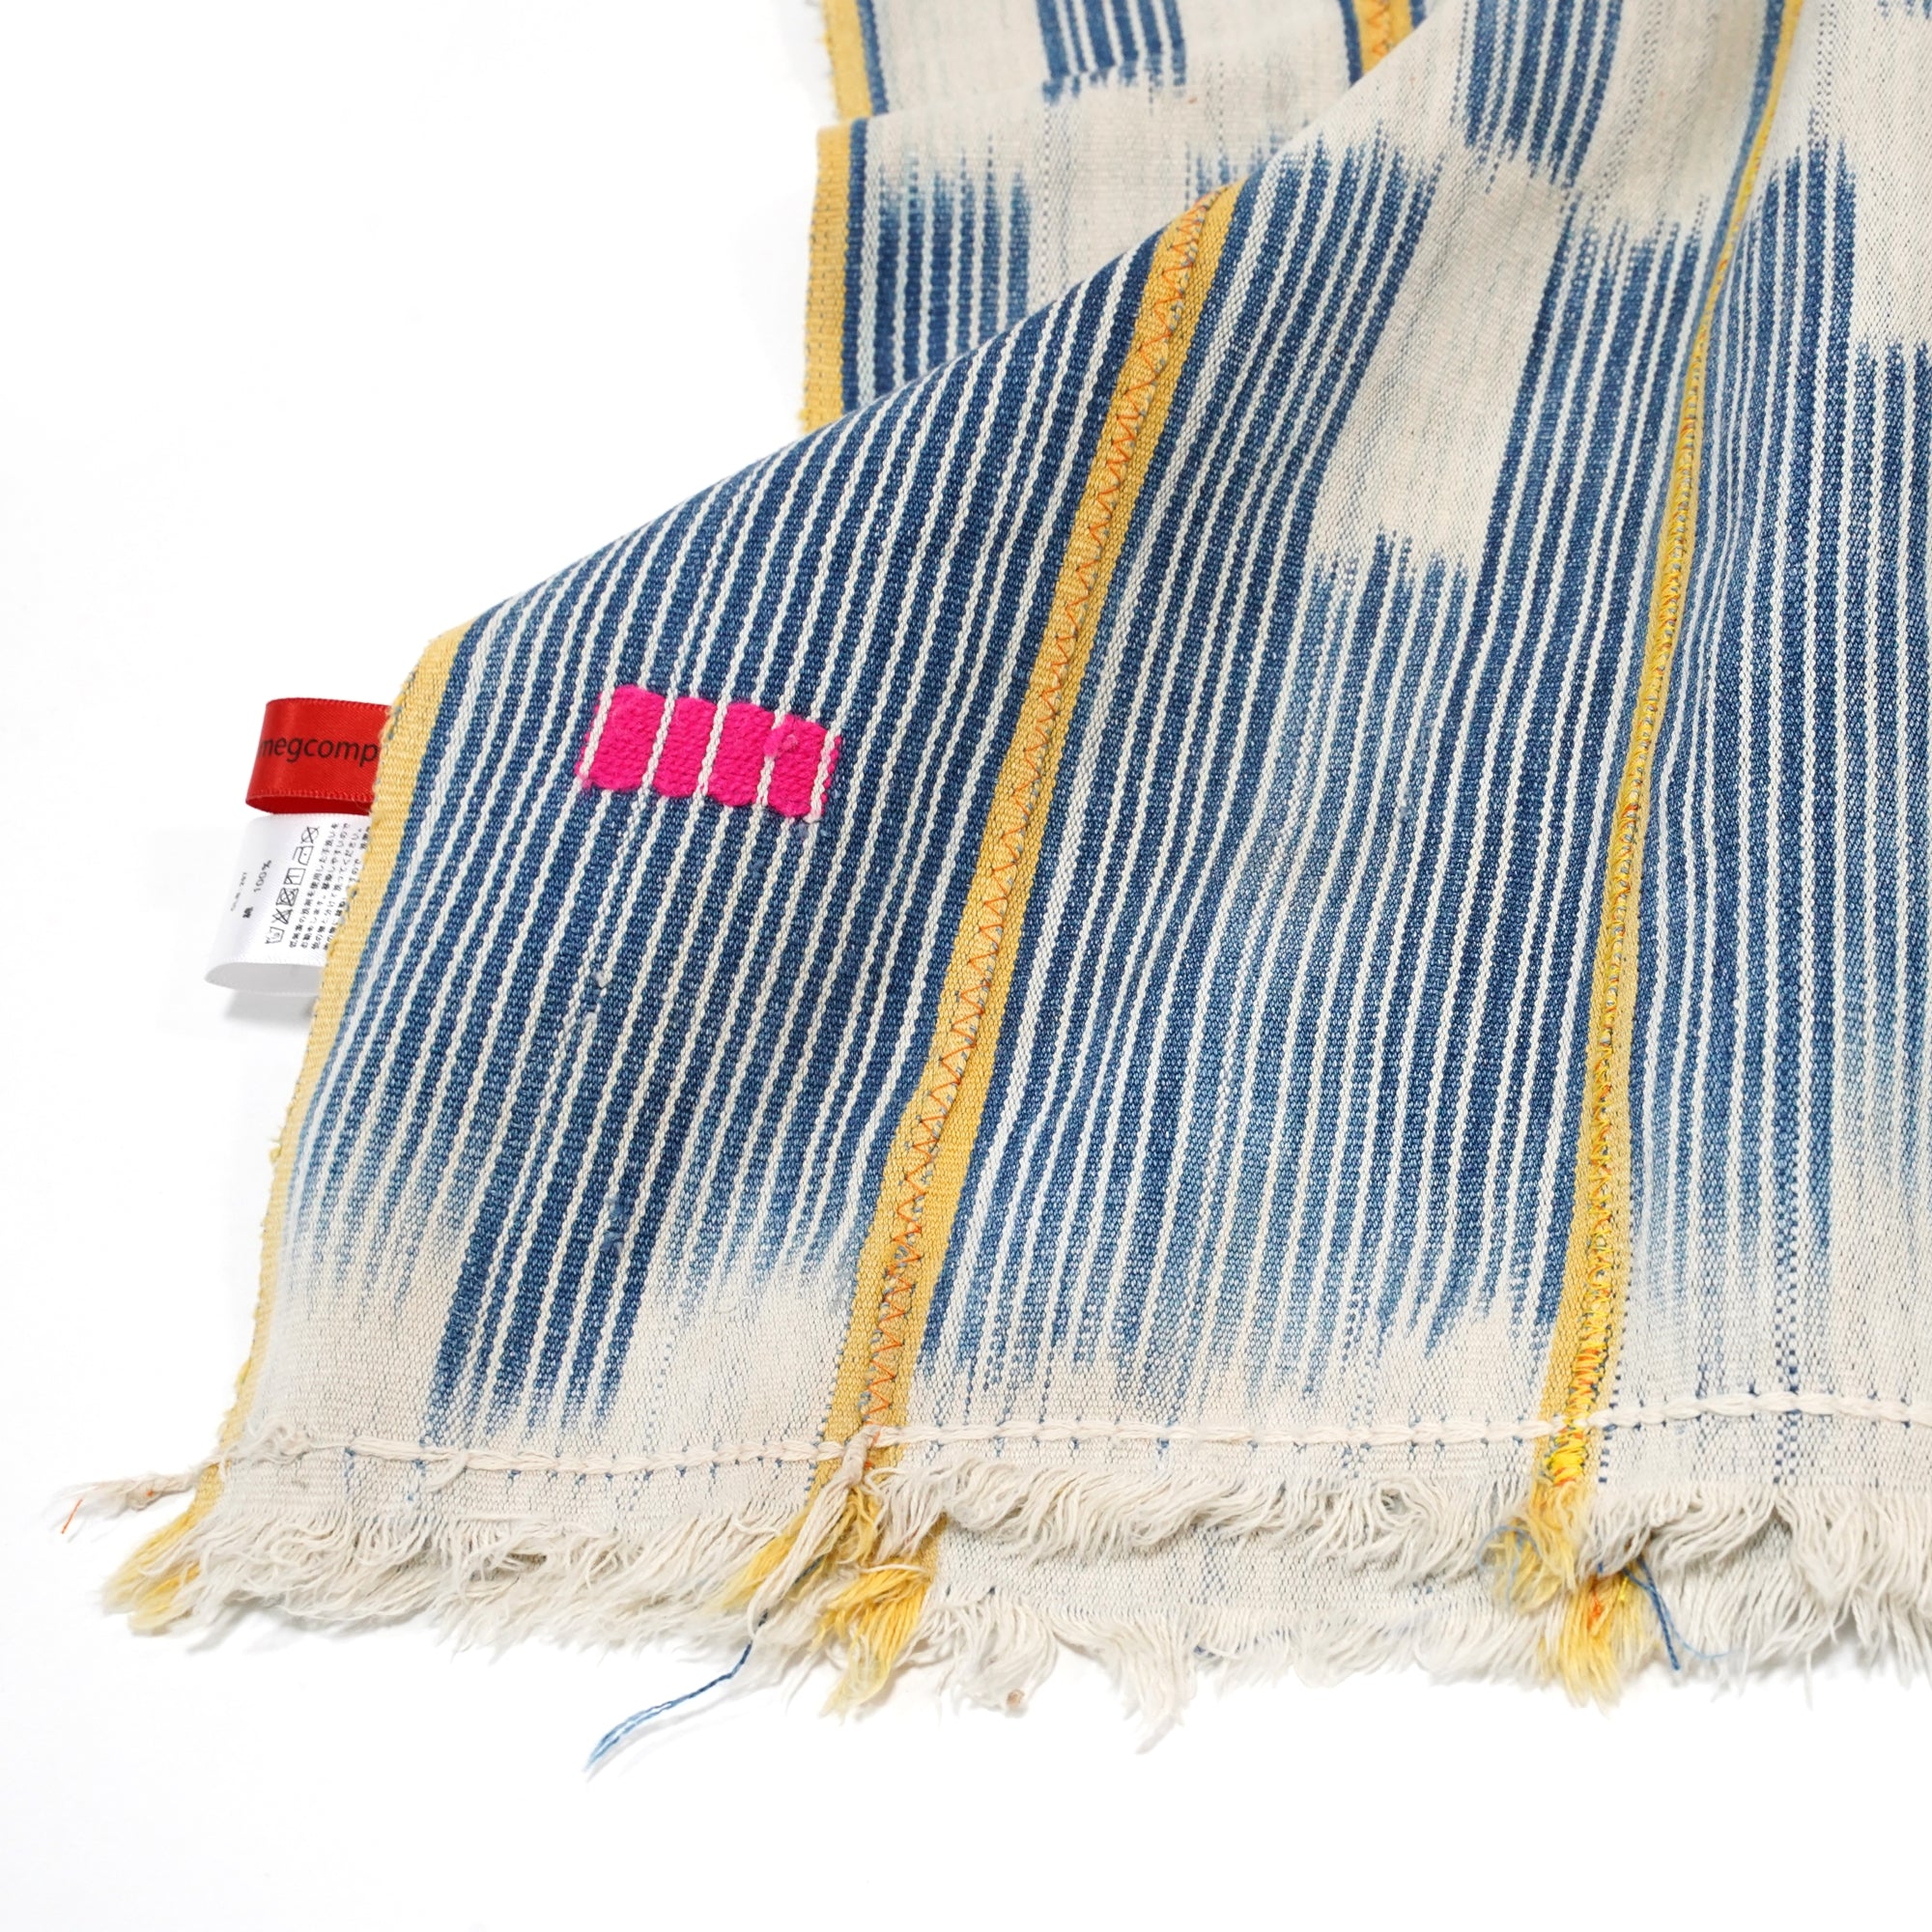 No:M29501 | Name:Poncho | Color:Handwoven African Indigo Cloth, Stripe (One of a Kind) 【MONITALY】-MONITALY-ADDICTION FUKUOKA